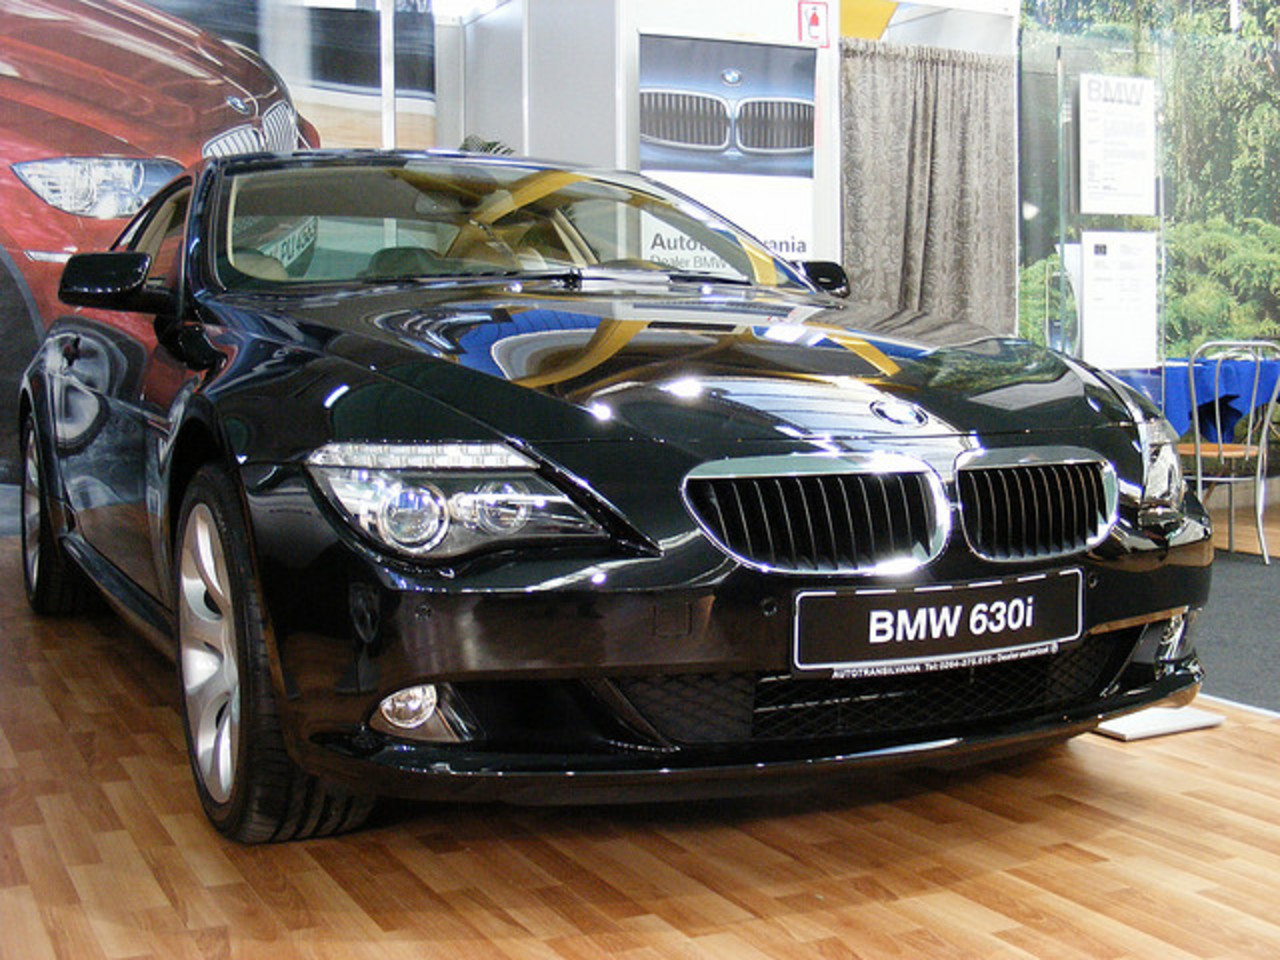 BMW 630i | Flickr - Photo Sharing!